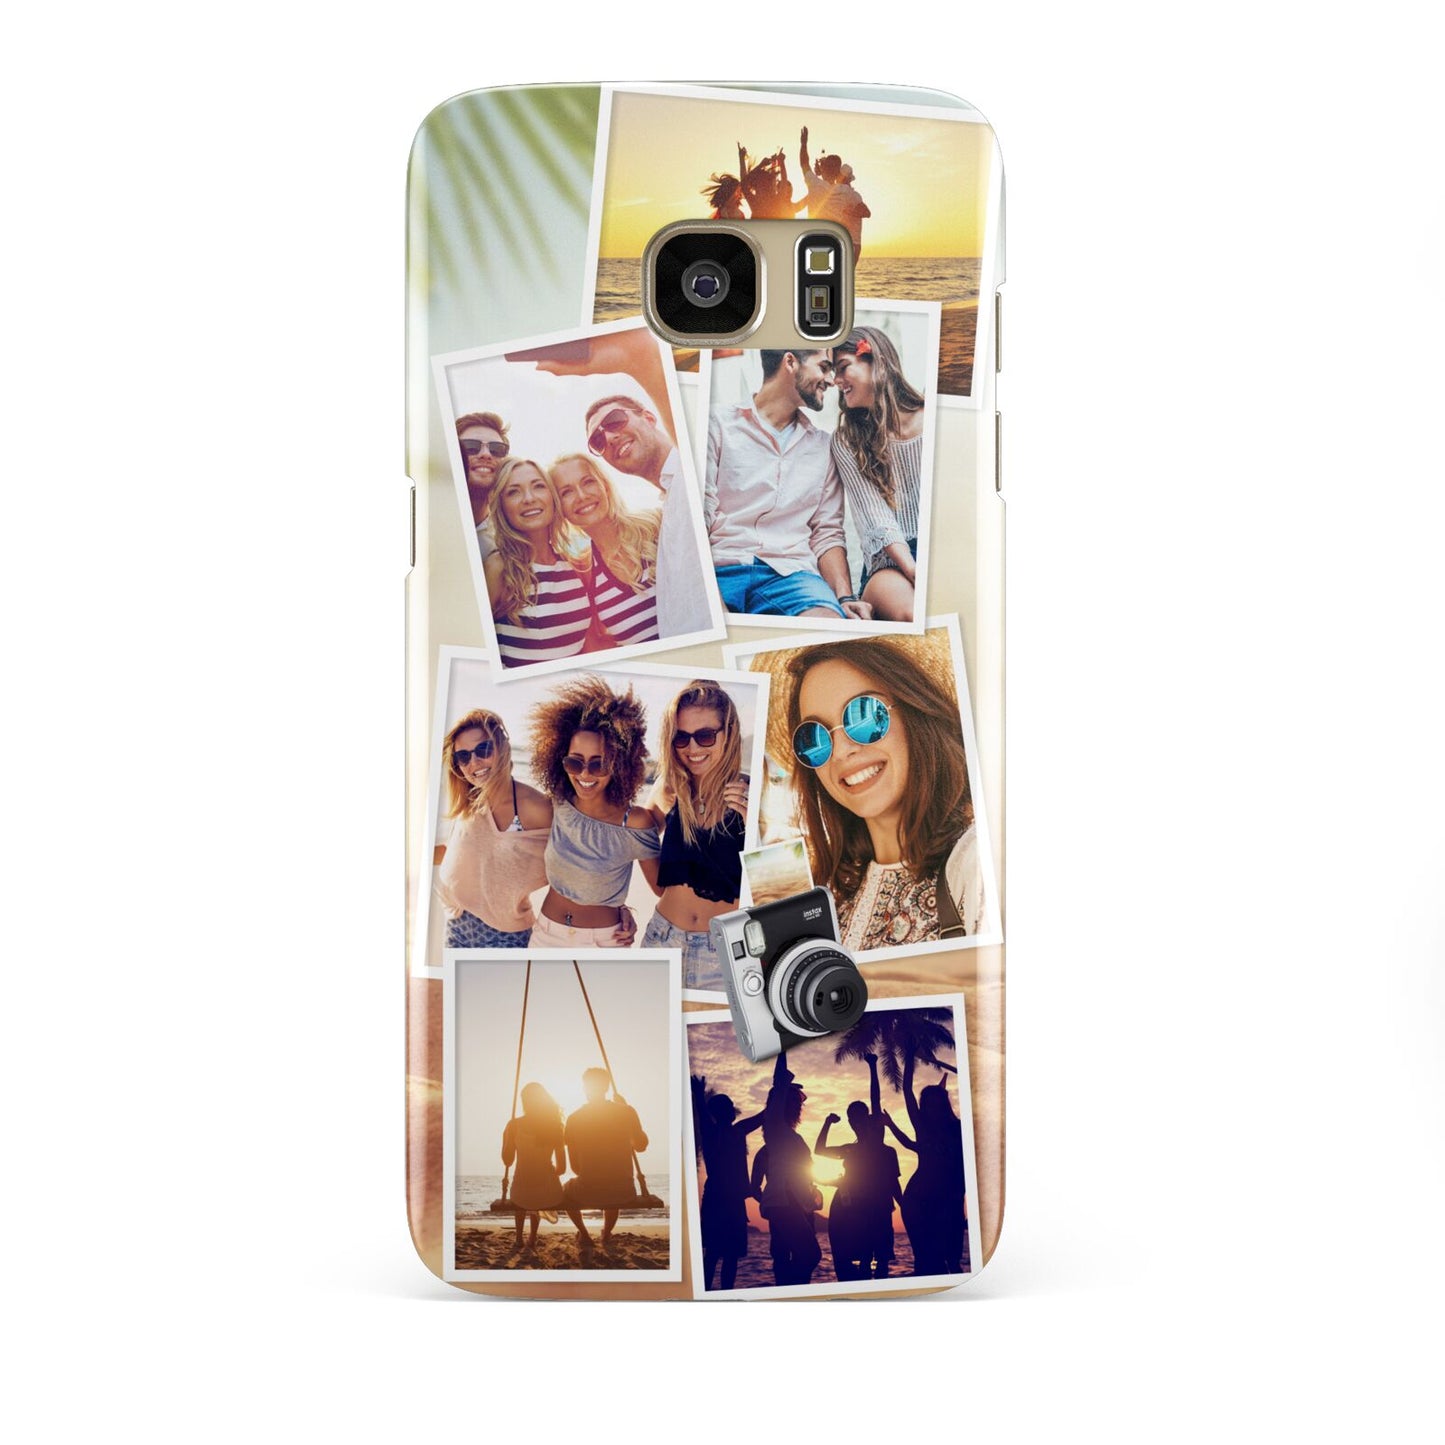 Personalised Summer Holiday Photos Samsung Galaxy S7 Edge Case